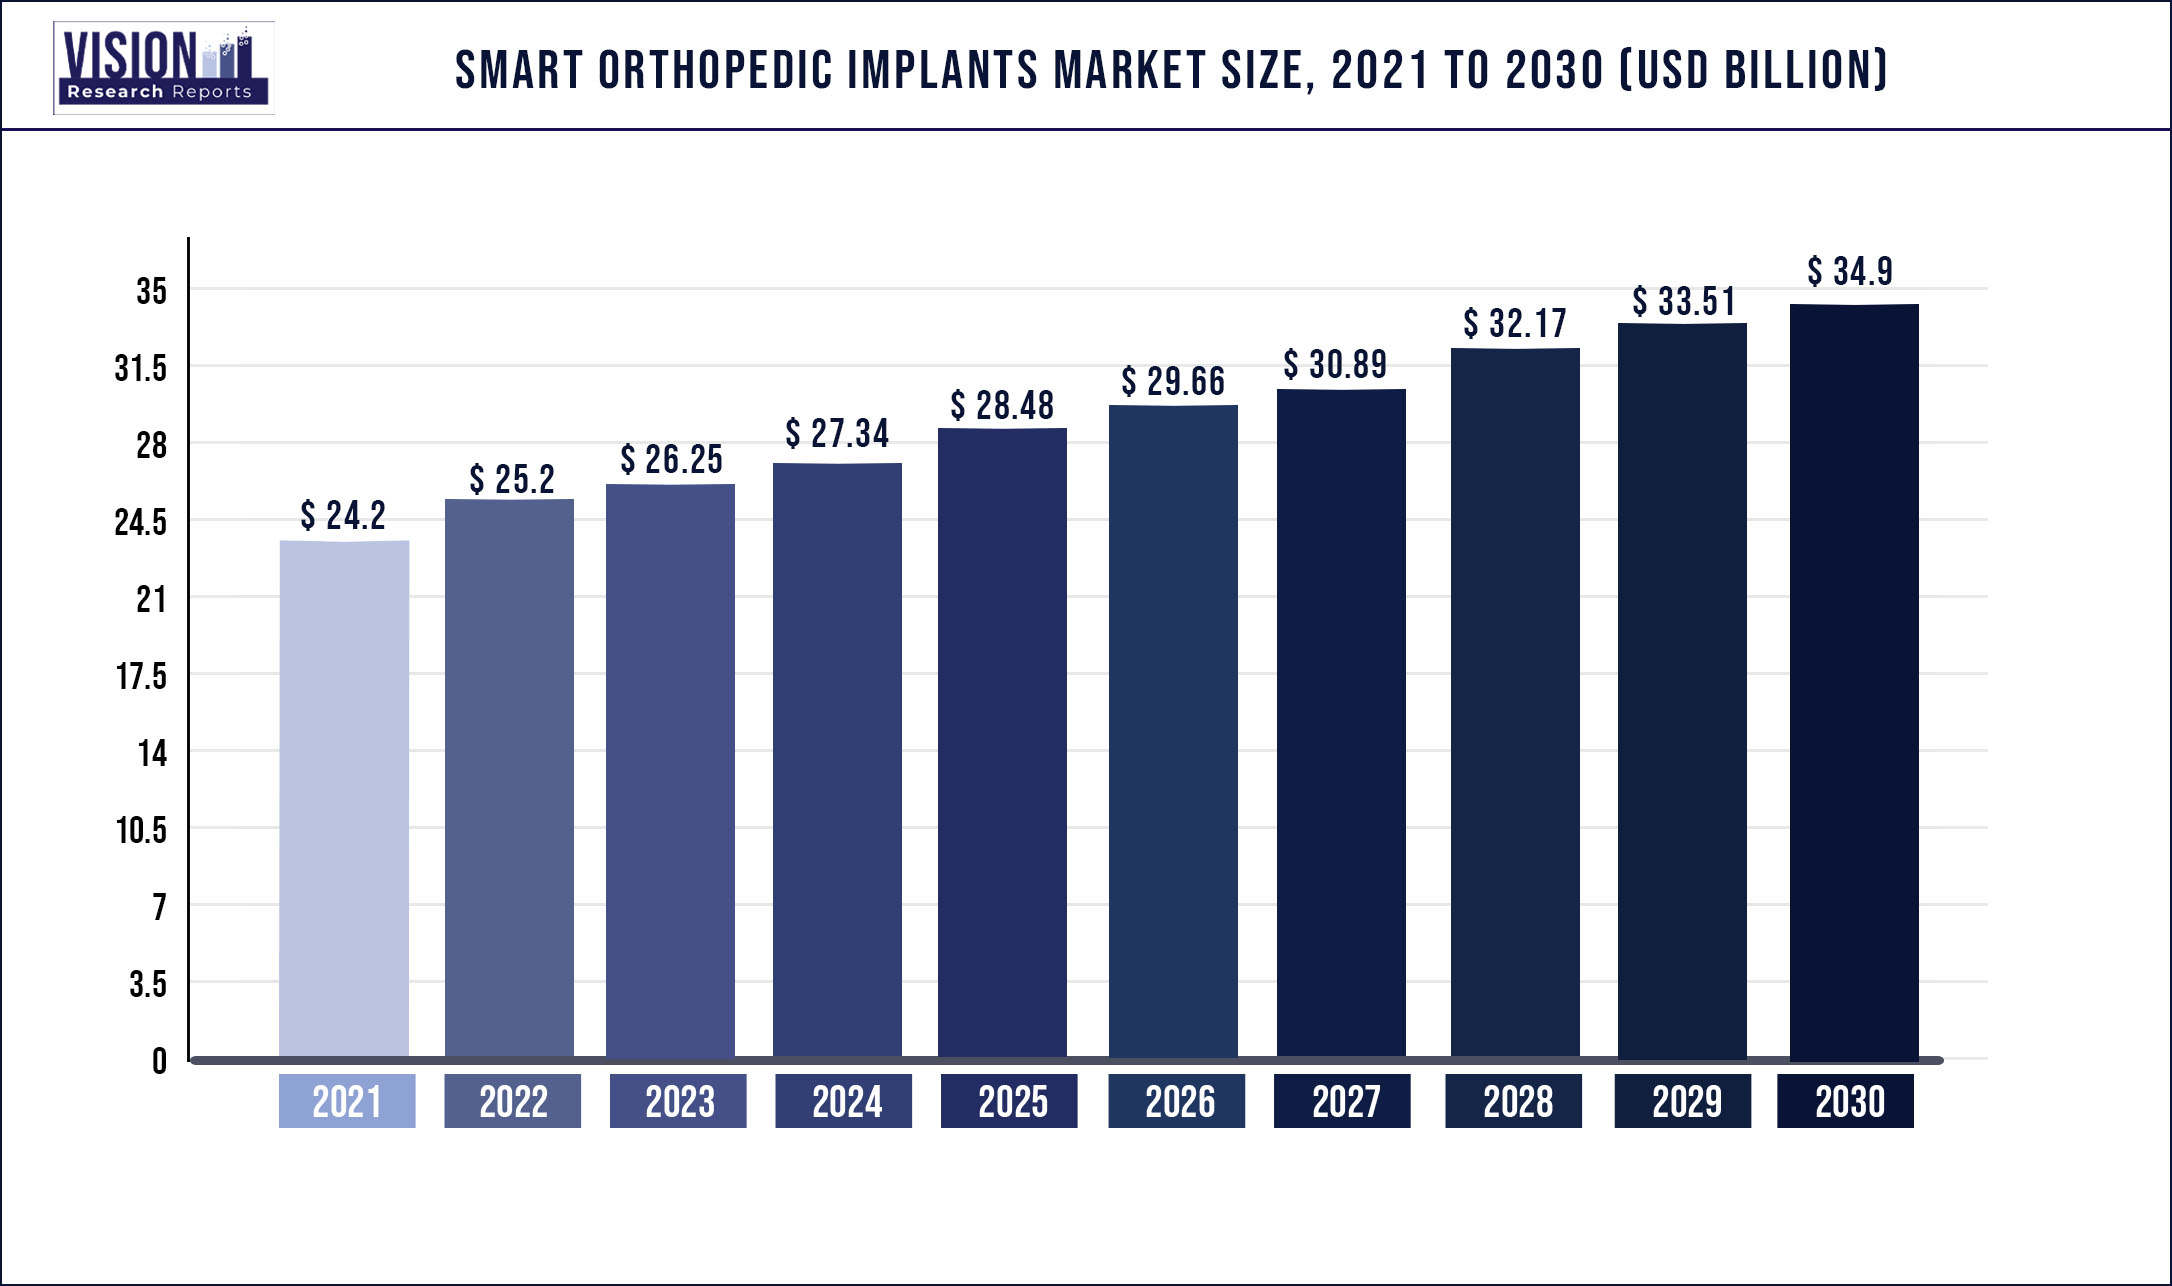 Smart Orthopedic Implants Market Size 2021 to 2030